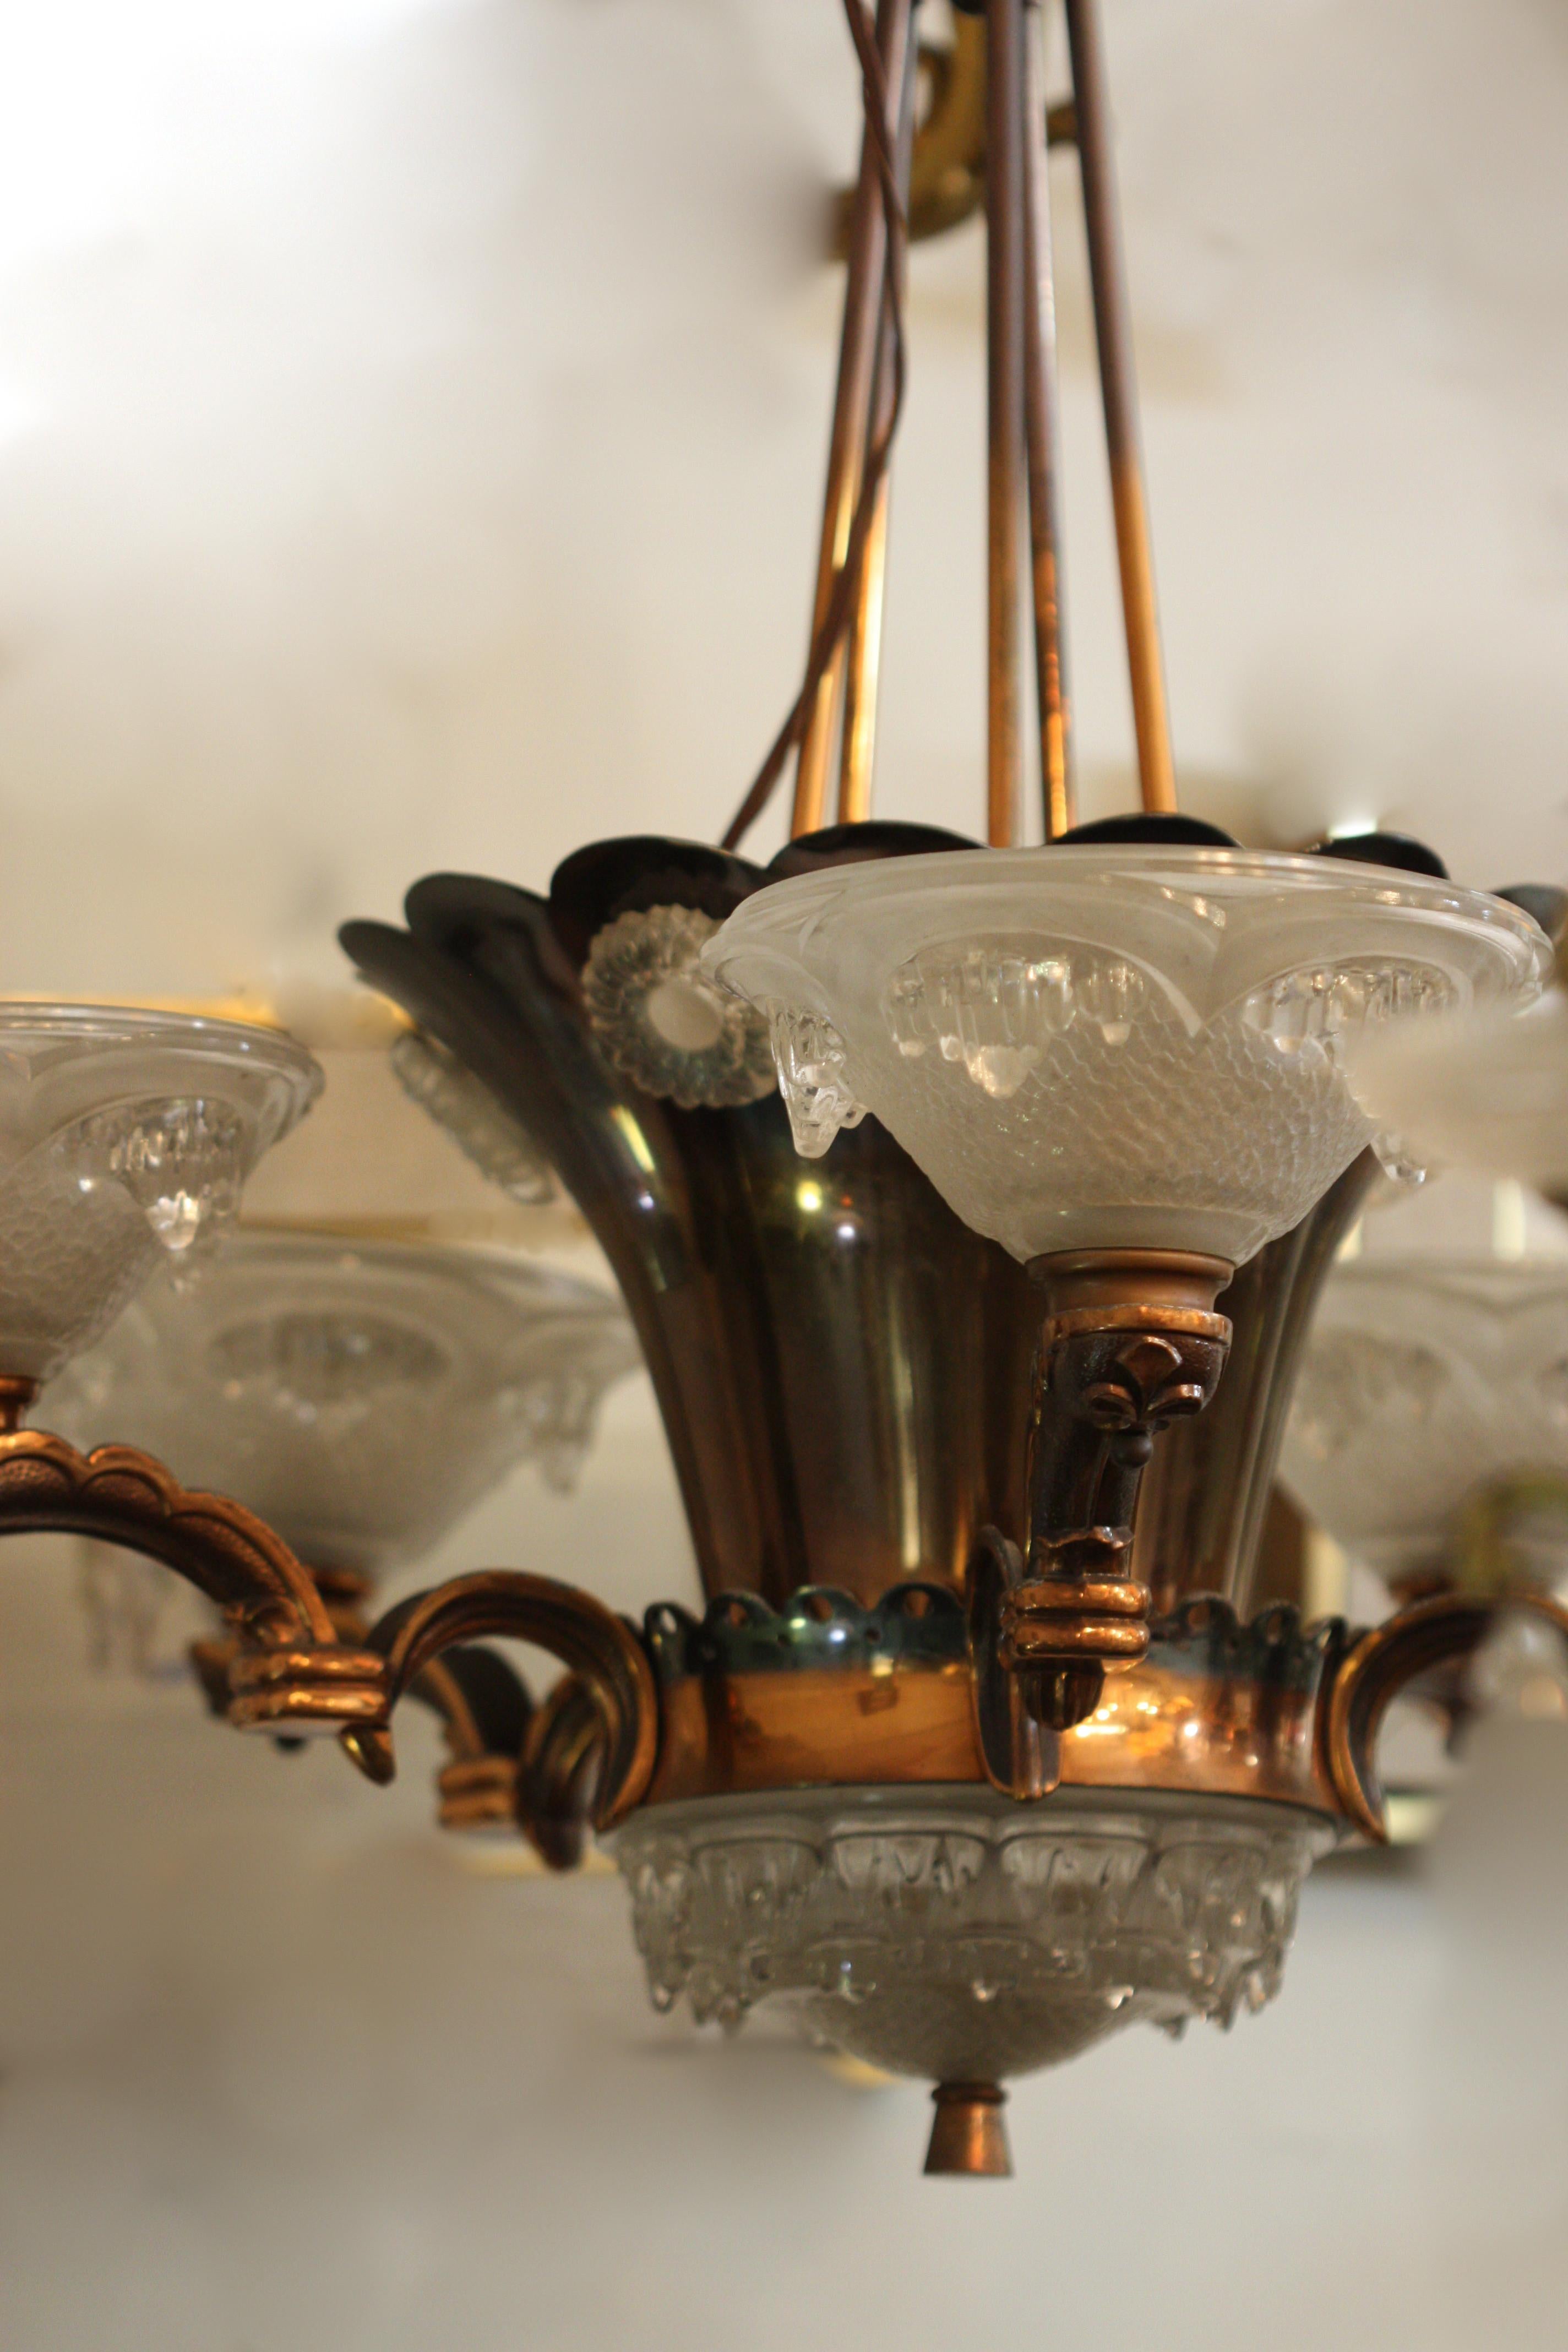 Mid-Century Modern six-light chandelier
1950 - 1959
Original vintage condition.
Chandelier has been rewired.
Dimensions
Height: 37 in. (93.98 cm.)
Diameter: Diameter 29 in. (73.66 cm.)
Shades: Diameter 8 in. 
Materials
Glass, brass,